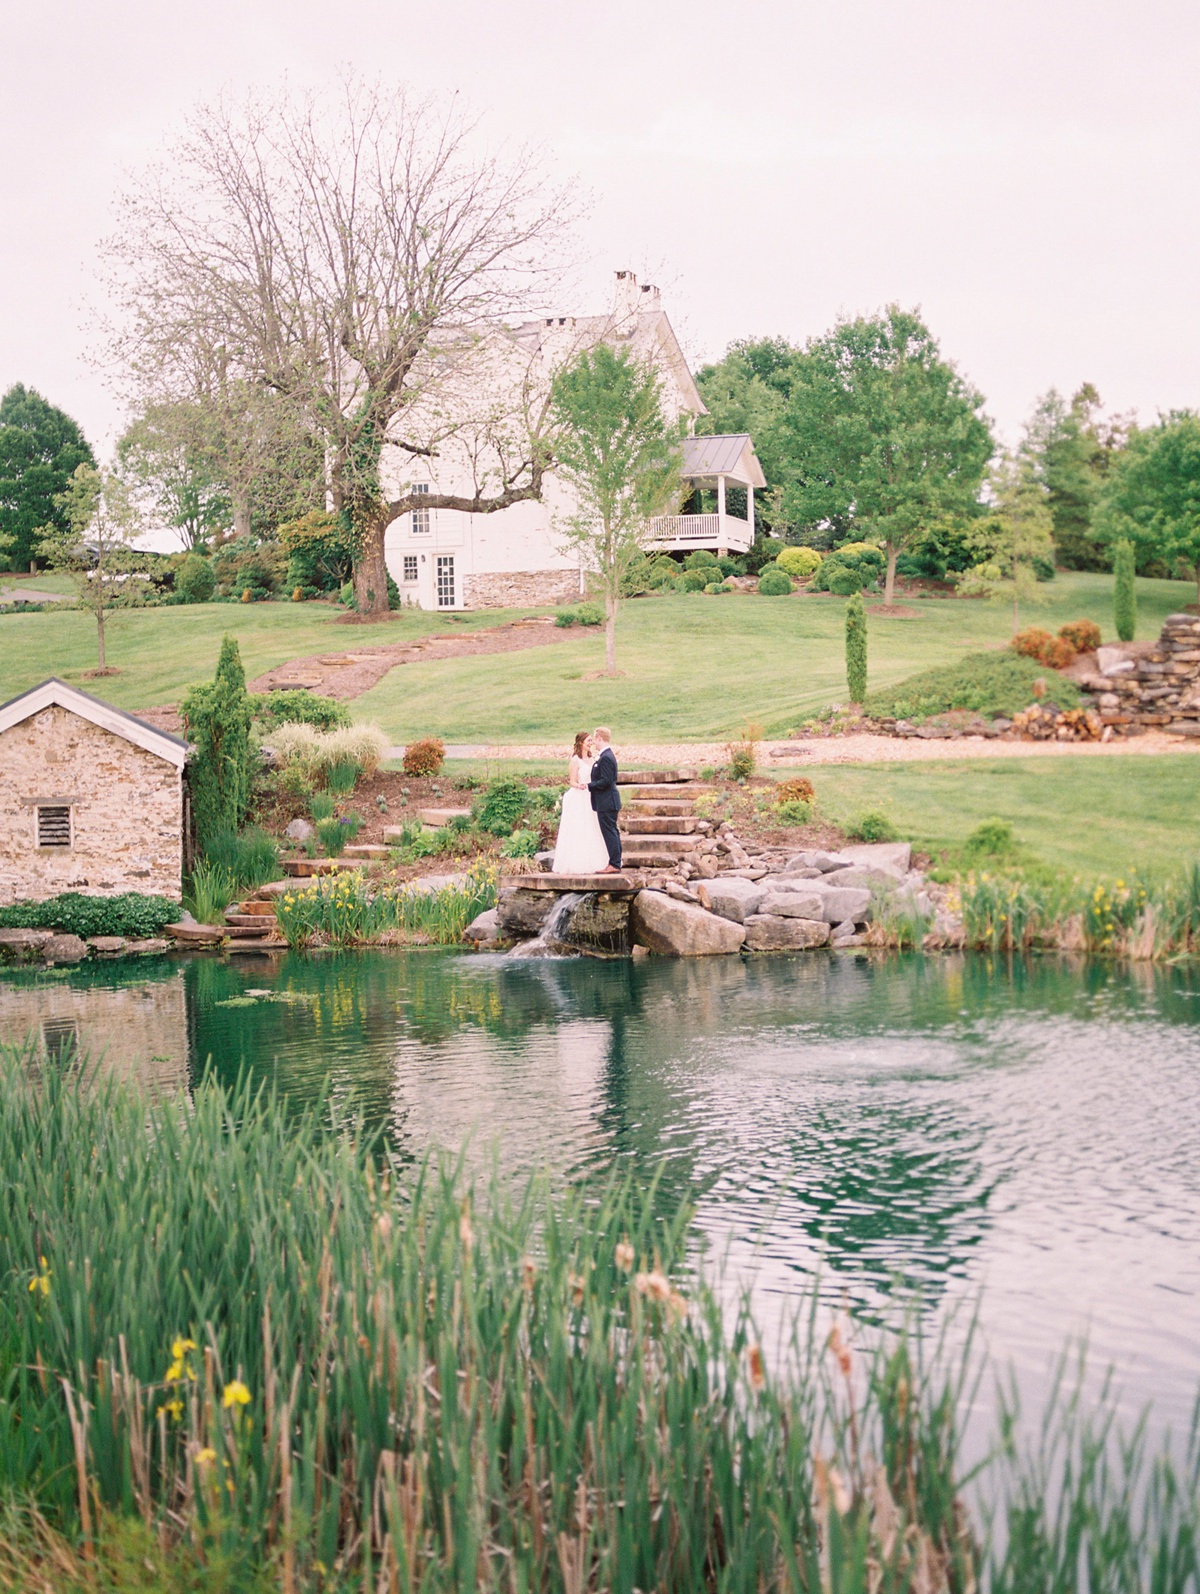 Glen Ellen Farm lakeside garden wedding venue | Shot by light and airy Wedding Photographer, Mandy Ford